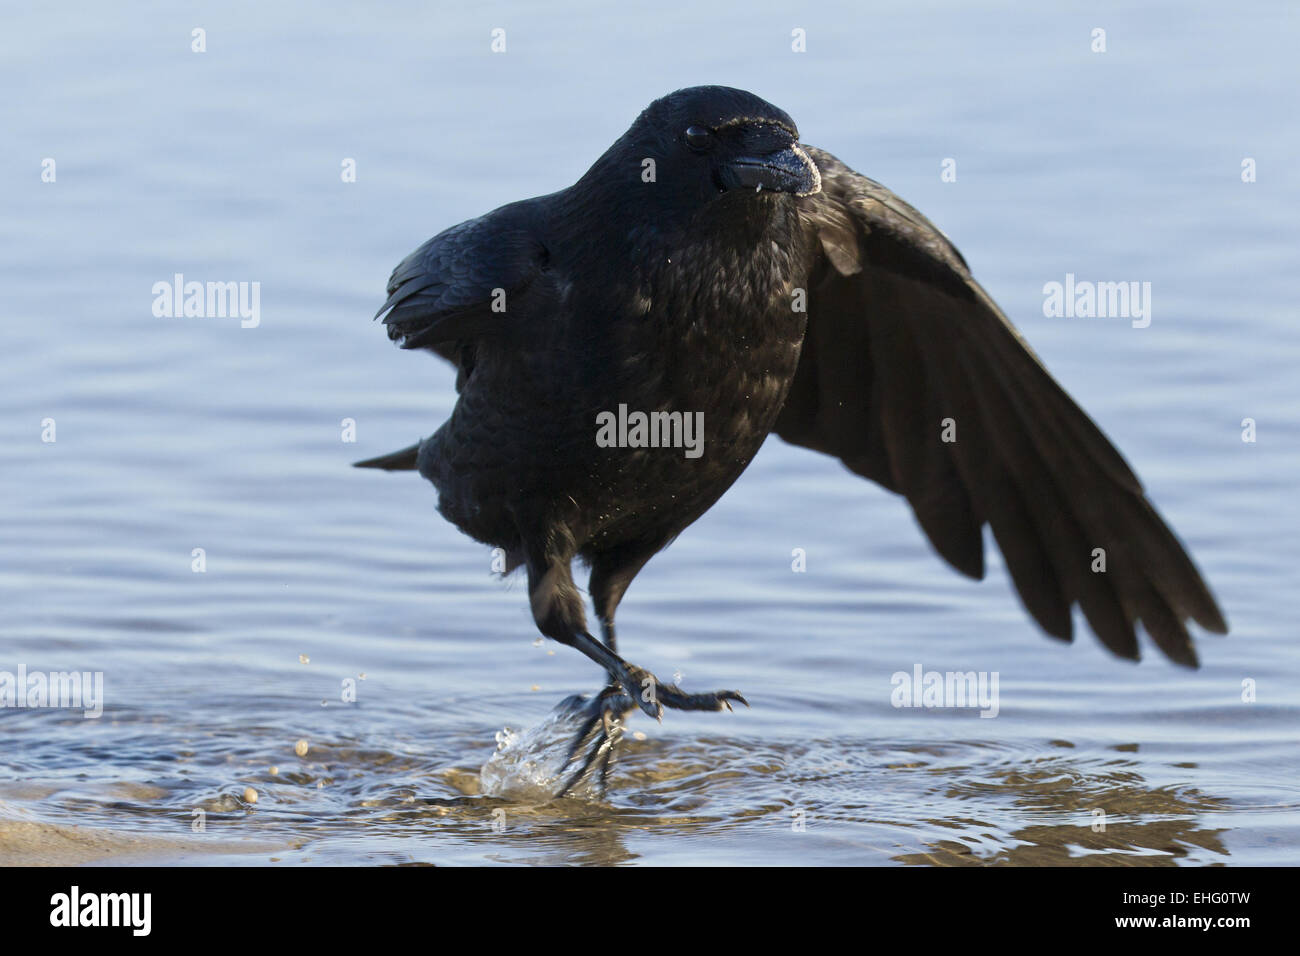 Common Raven (Corvus corax) on the beach Stock Photo